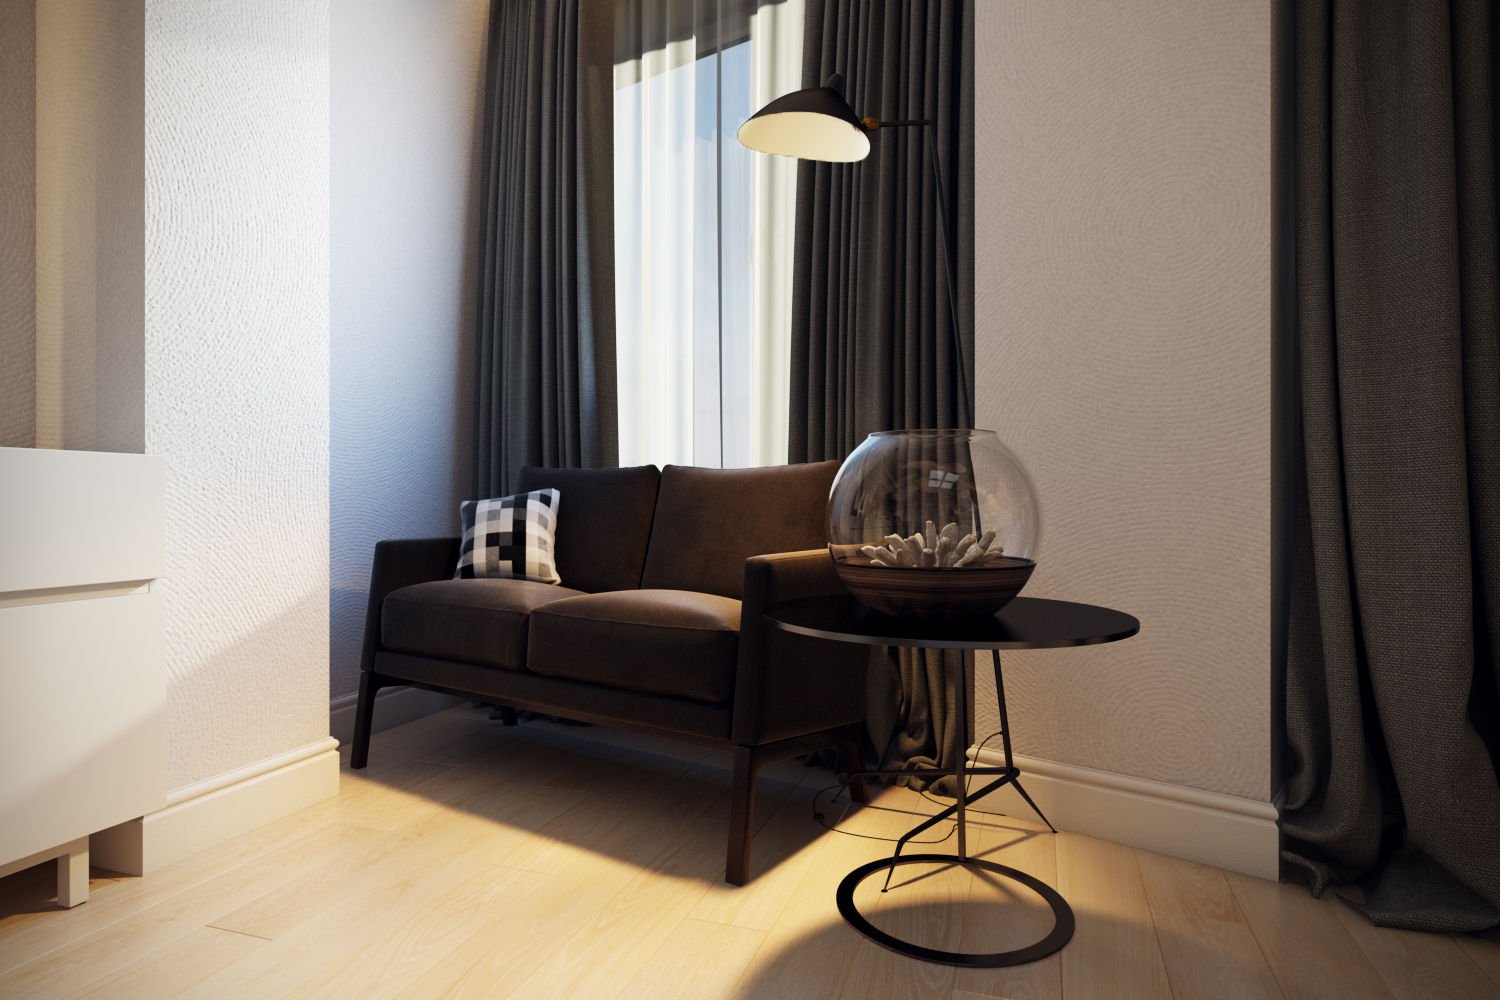 ЖК "Престиж", Design Studio Details Design Studio Details Eclectic style bedroom